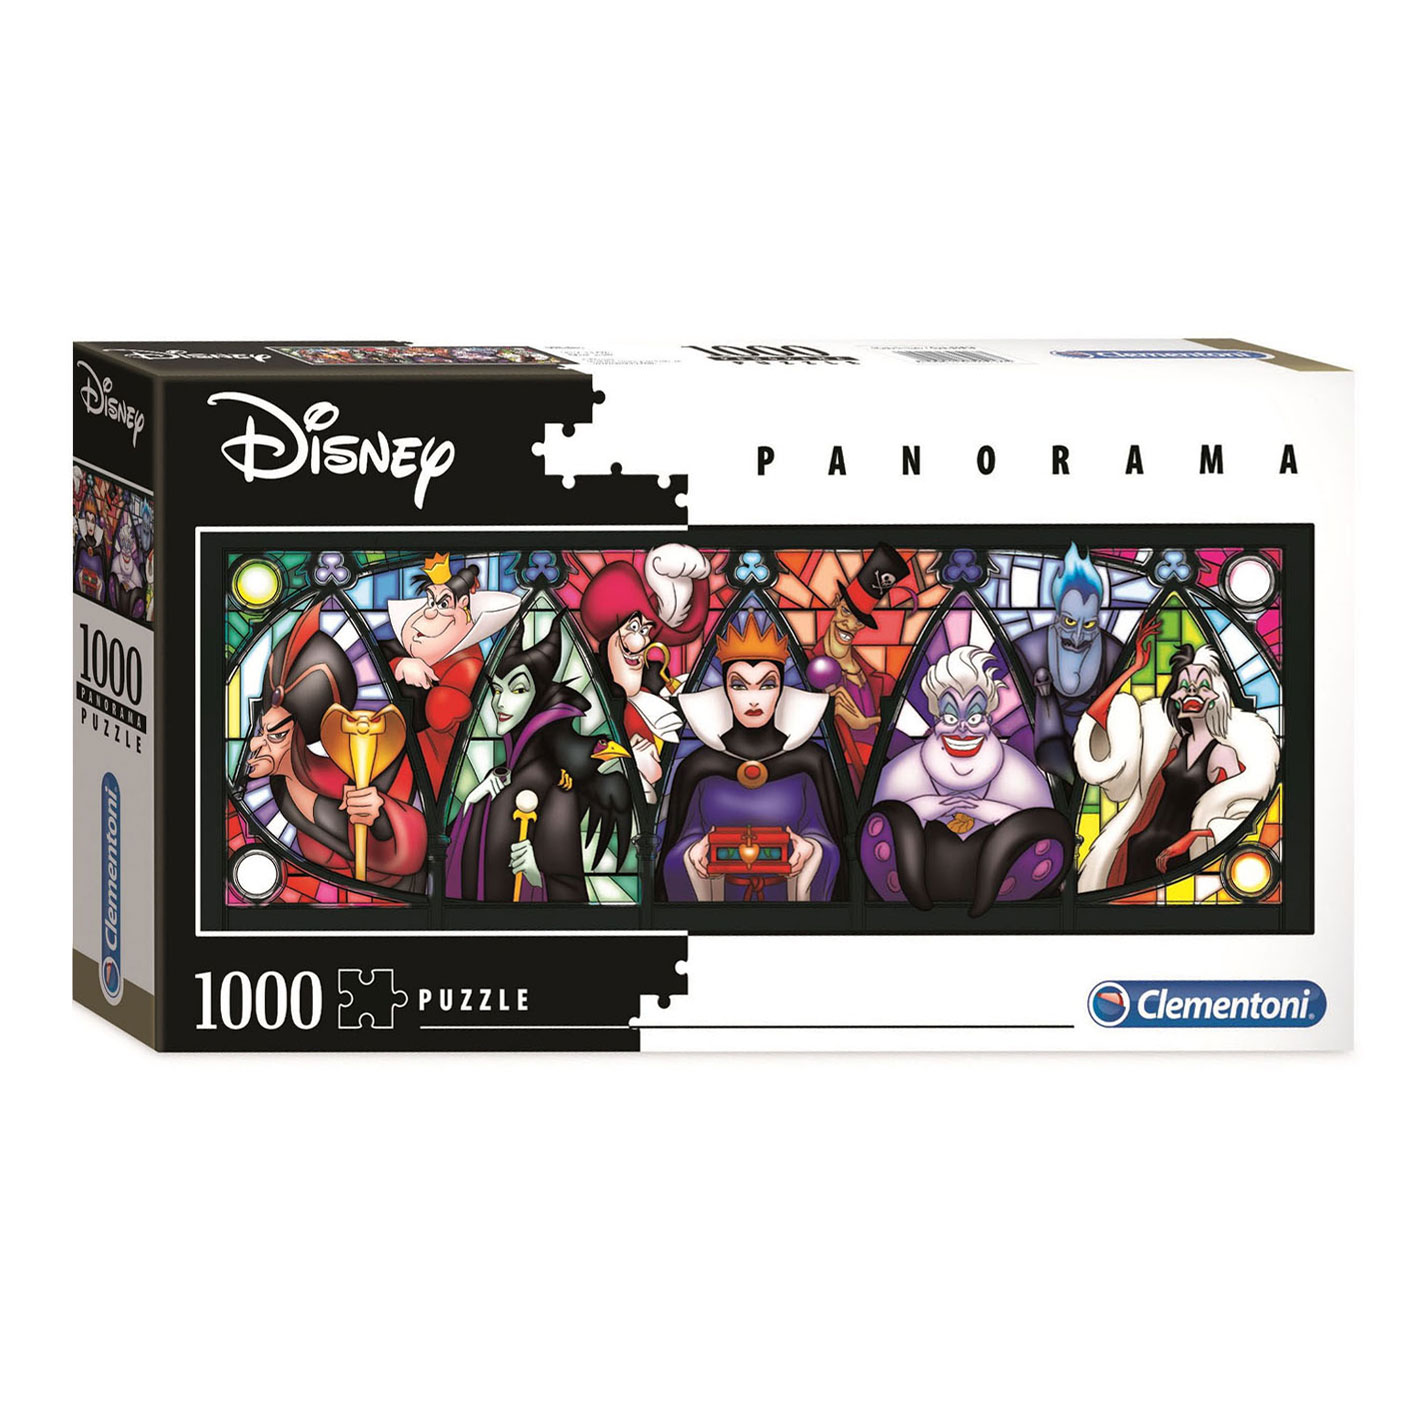 Clementoni Puzzle Panorama Disney Villains, 1000 Teile.